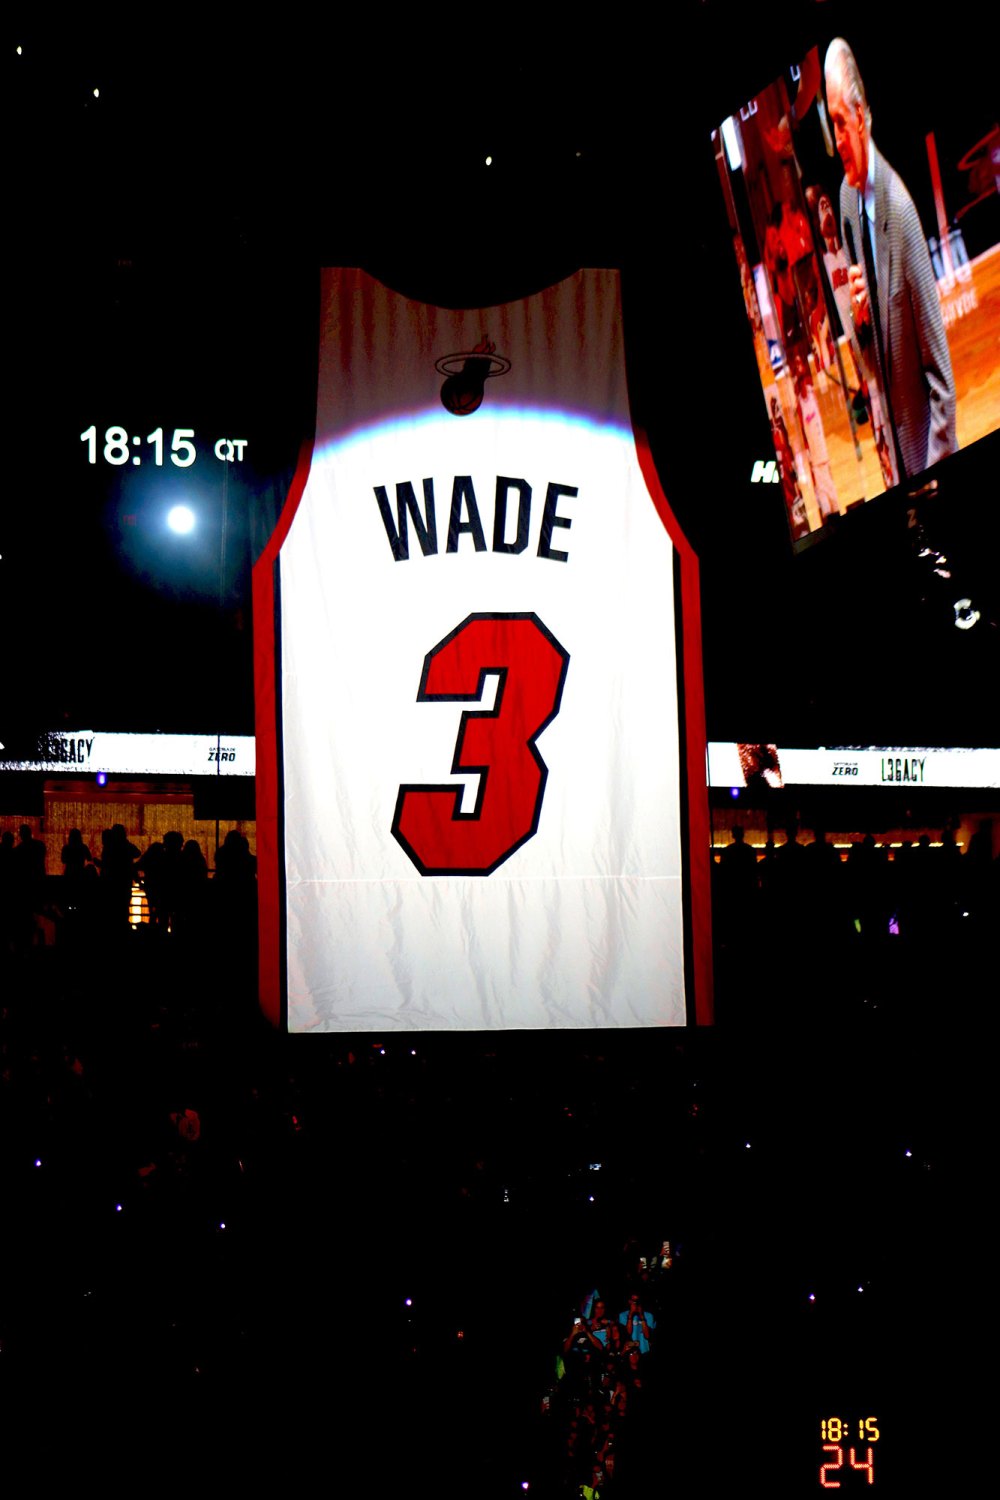 Miami Heat to retire Dwyane Wade's No. 3 jersey during three-day  celebration